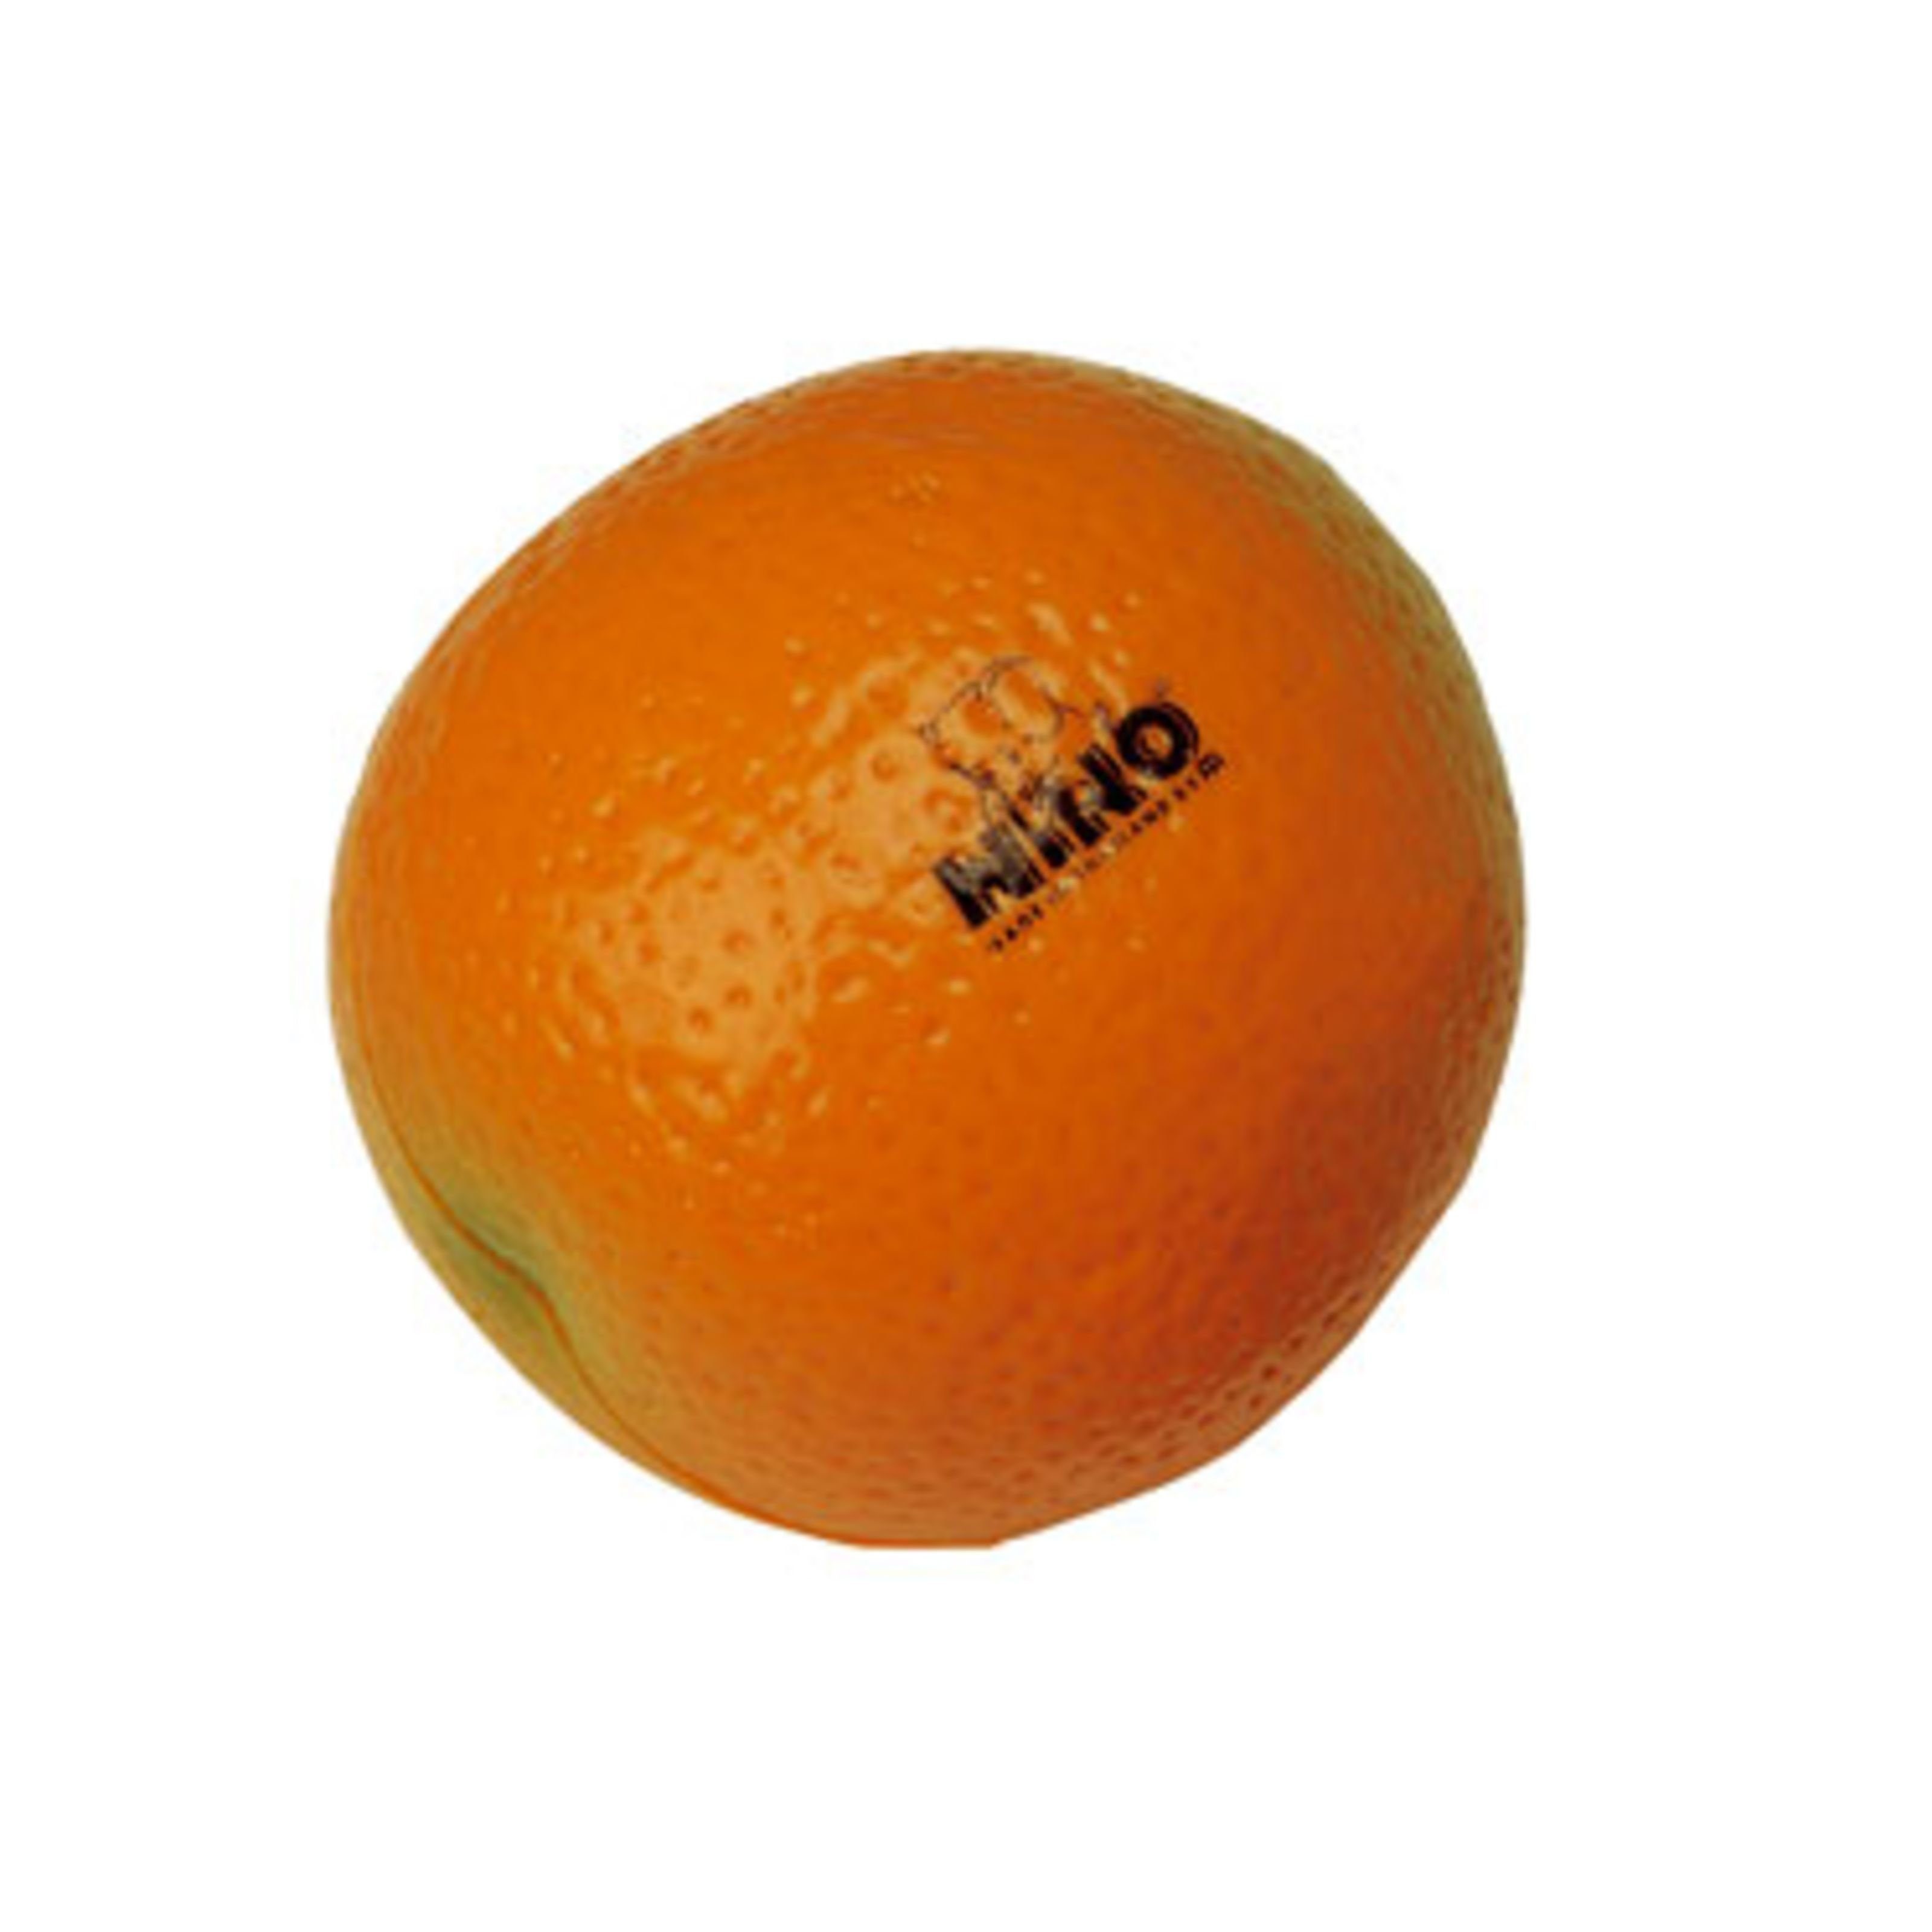 Shaker Botany Orange Spielzeug-Musikinstrument, NINO598 - Meinl Fruit Percussion Shaker,